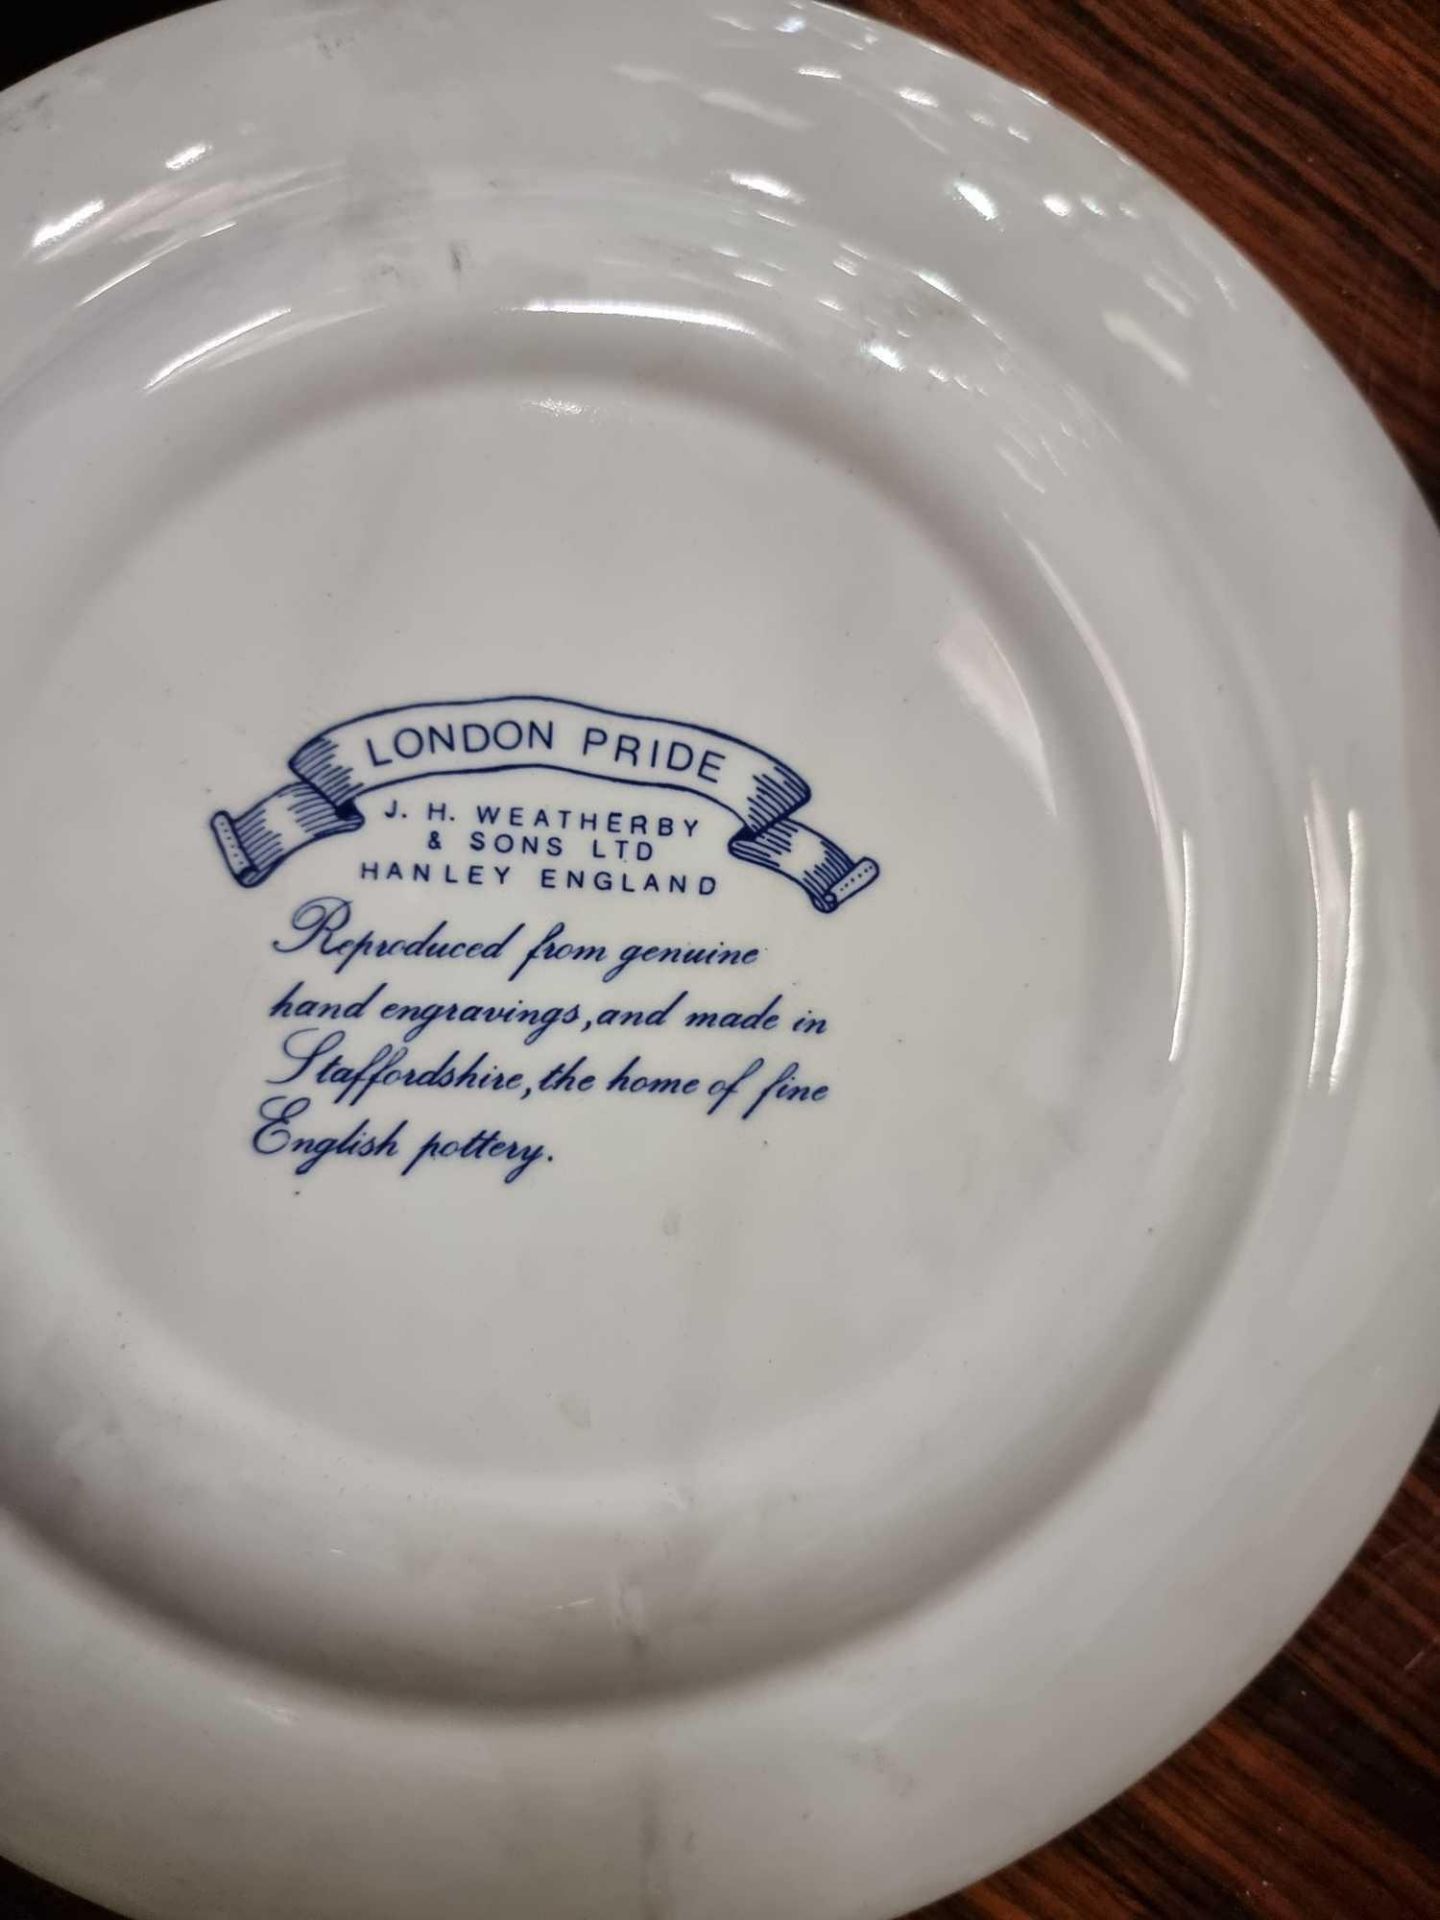 2 x J H Weatherby and Sons London Pride Ceramic Decorative Plates - Bild 4 aus 5